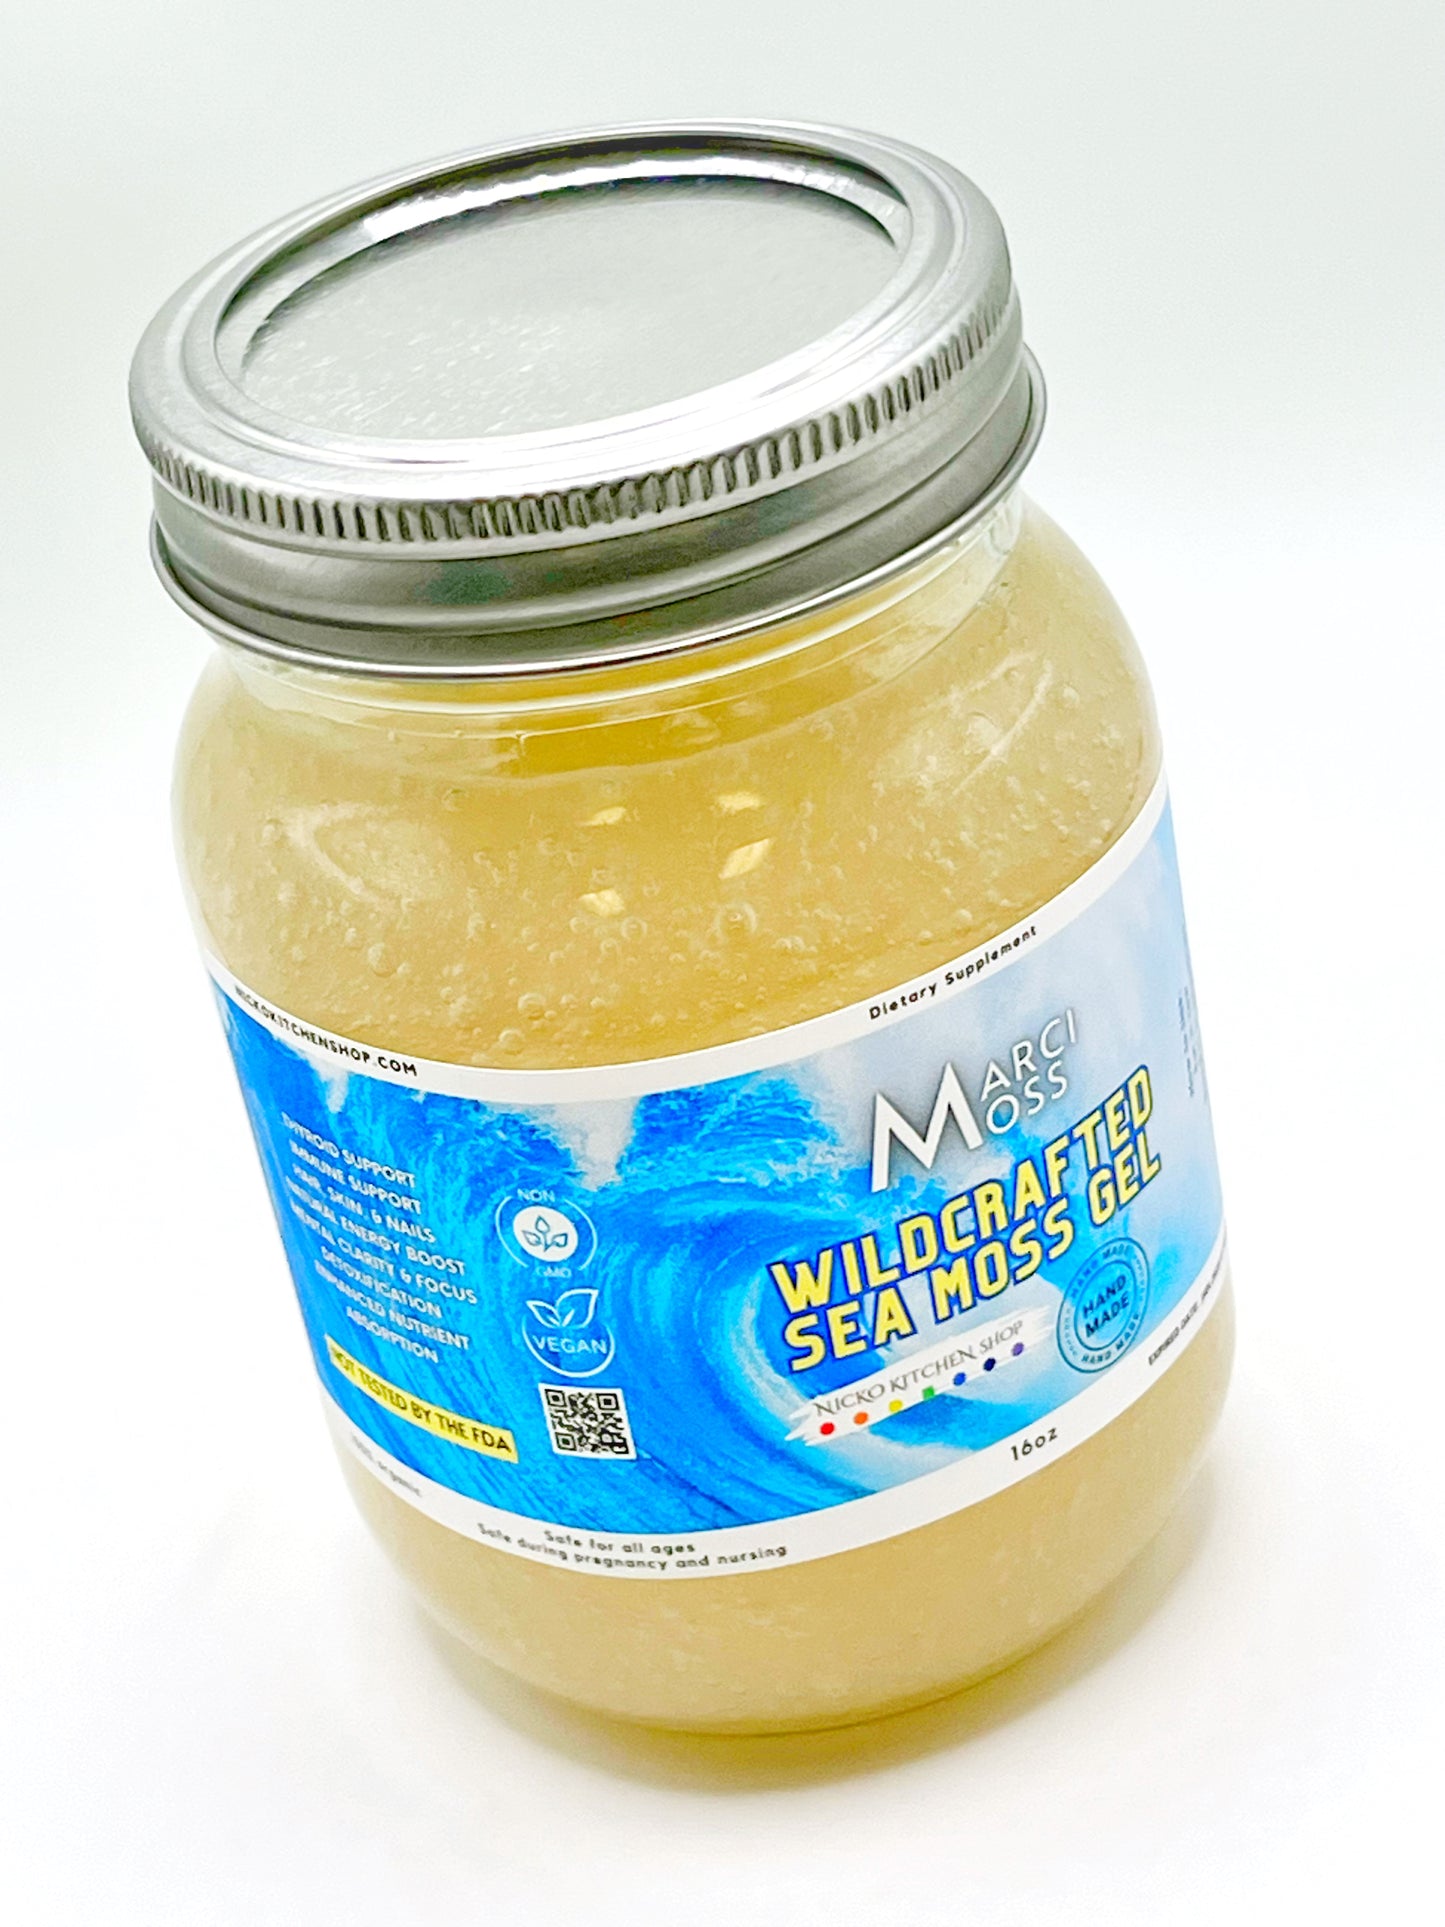 Wildcrafted Sea Moss Gel | MarciMoss  | 16oz Jar |  Recurring Delivery